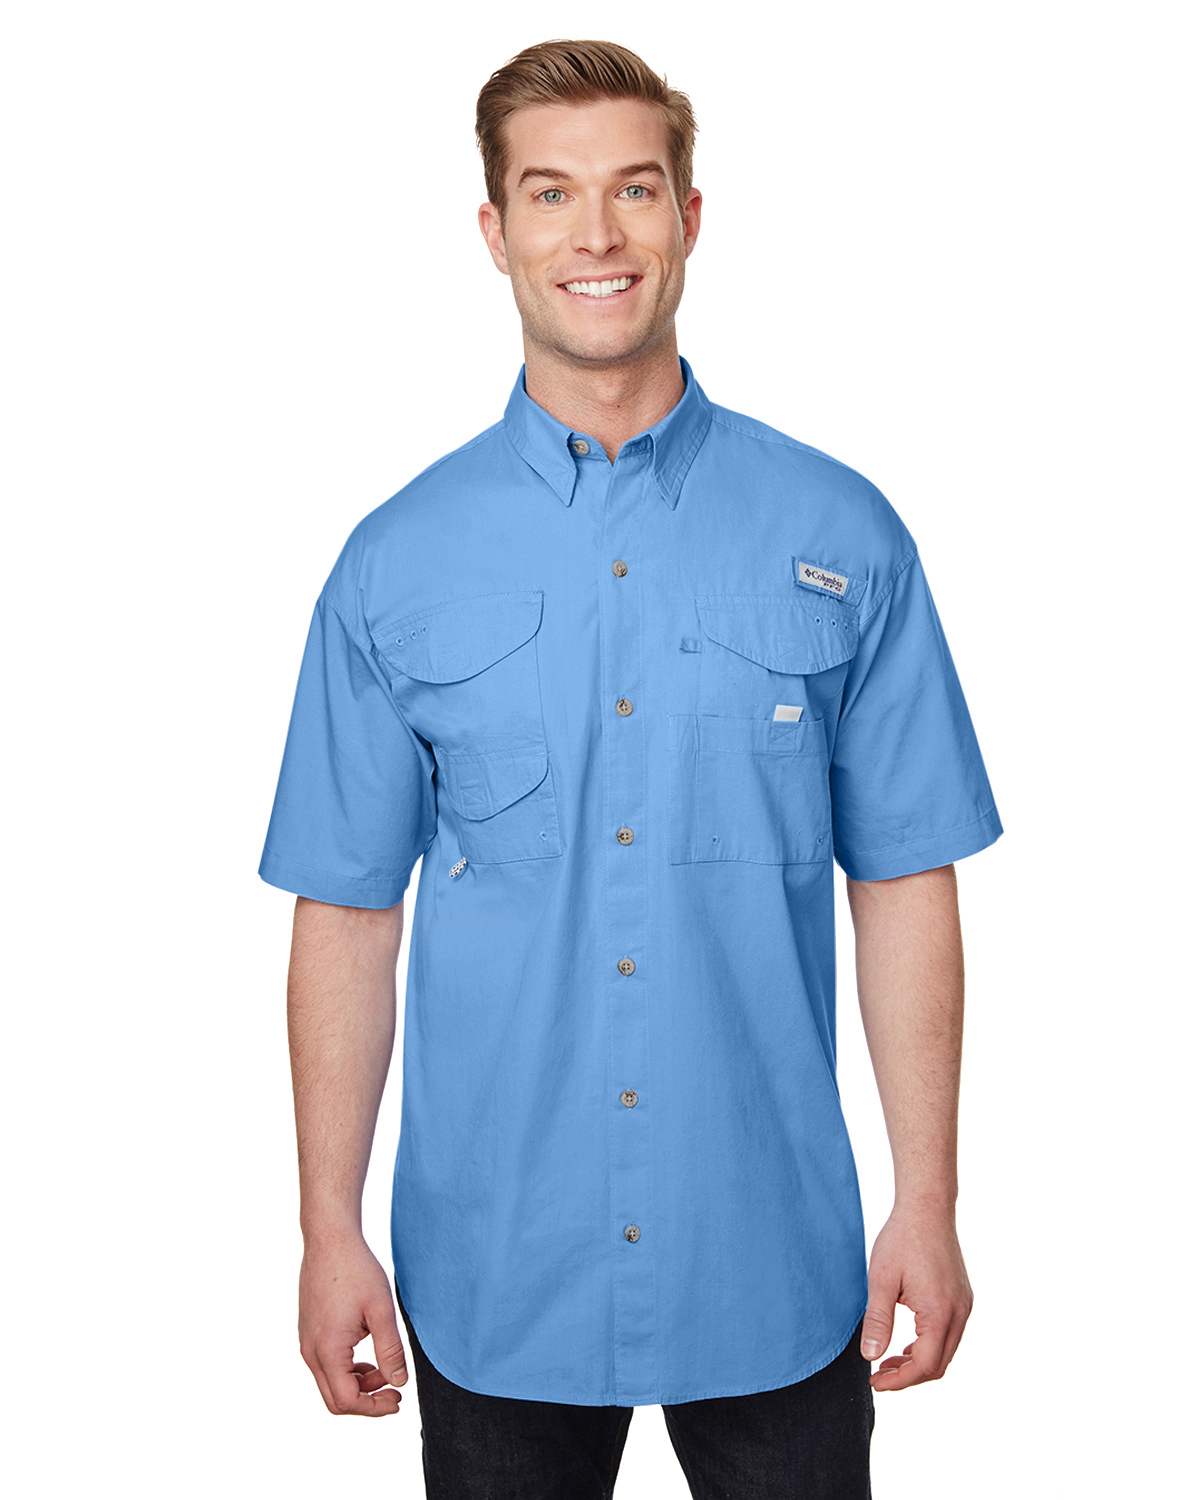 Columbia Mens 7130 Size S, M, L, XL-2XL 3XL Short Sleeve BONEHEAD Fishing  Shirts